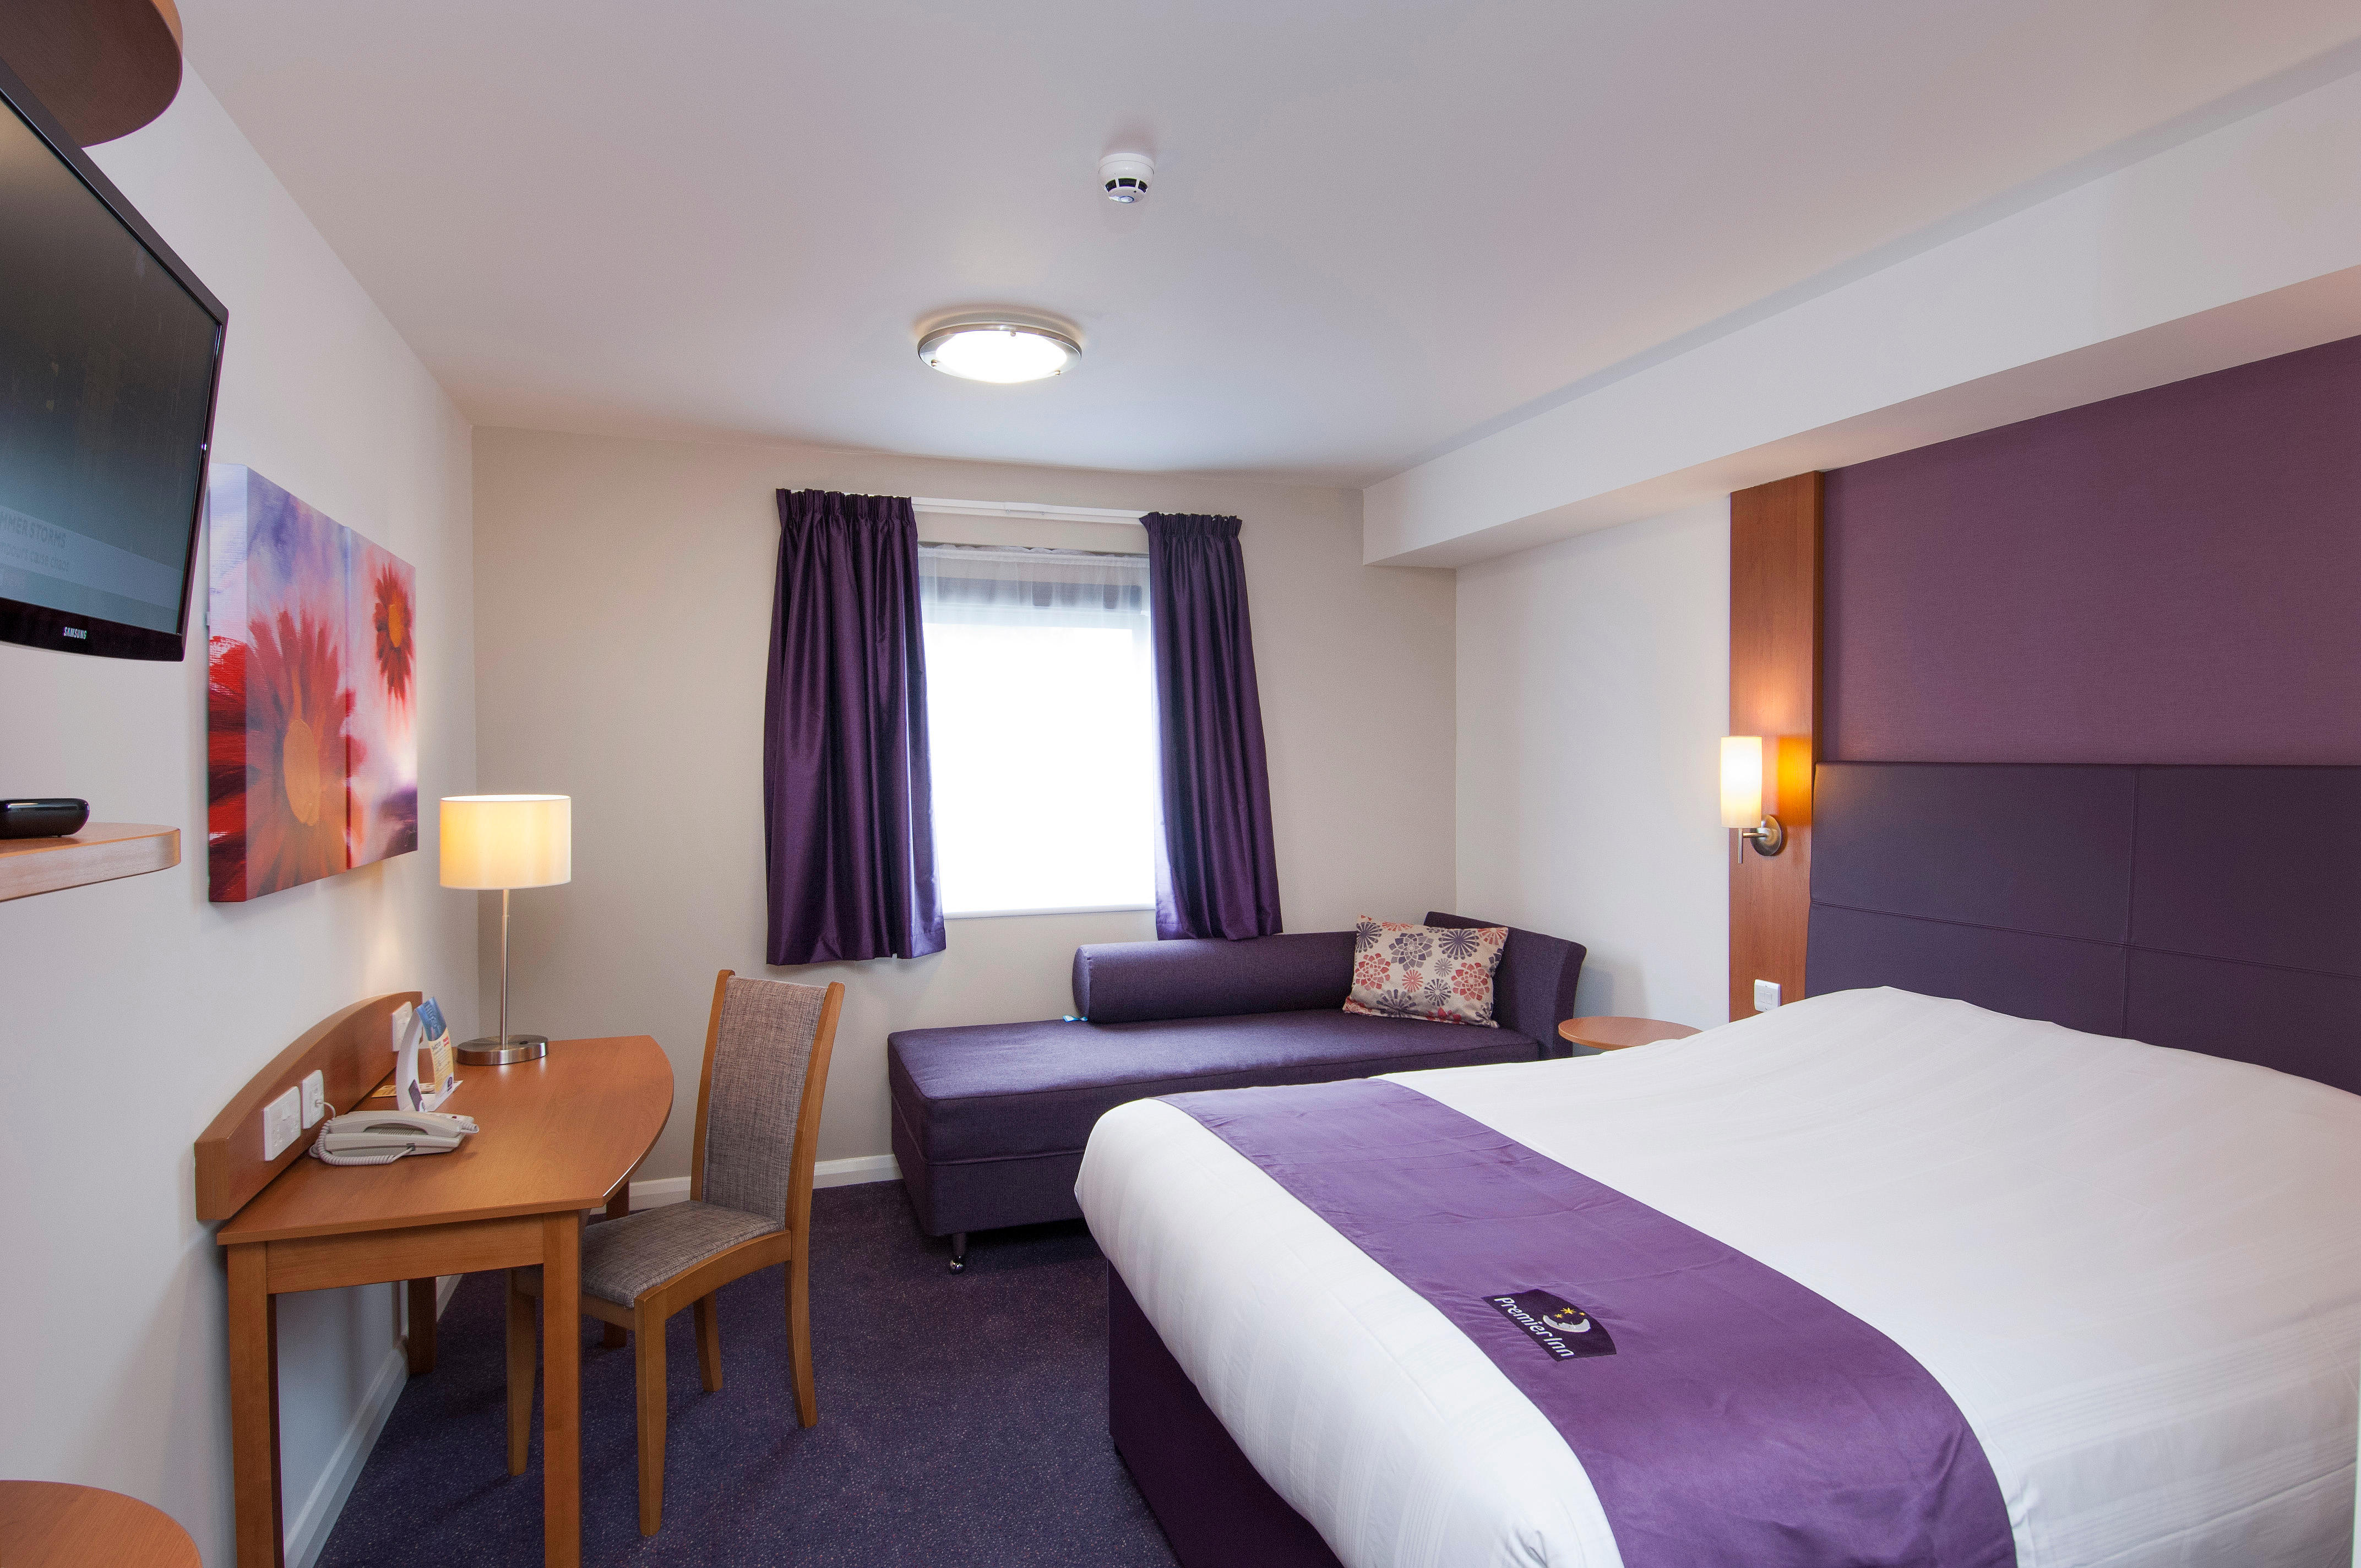 Premier Inn bedroom Premier Inn London Richmond hotel London 03333 219261